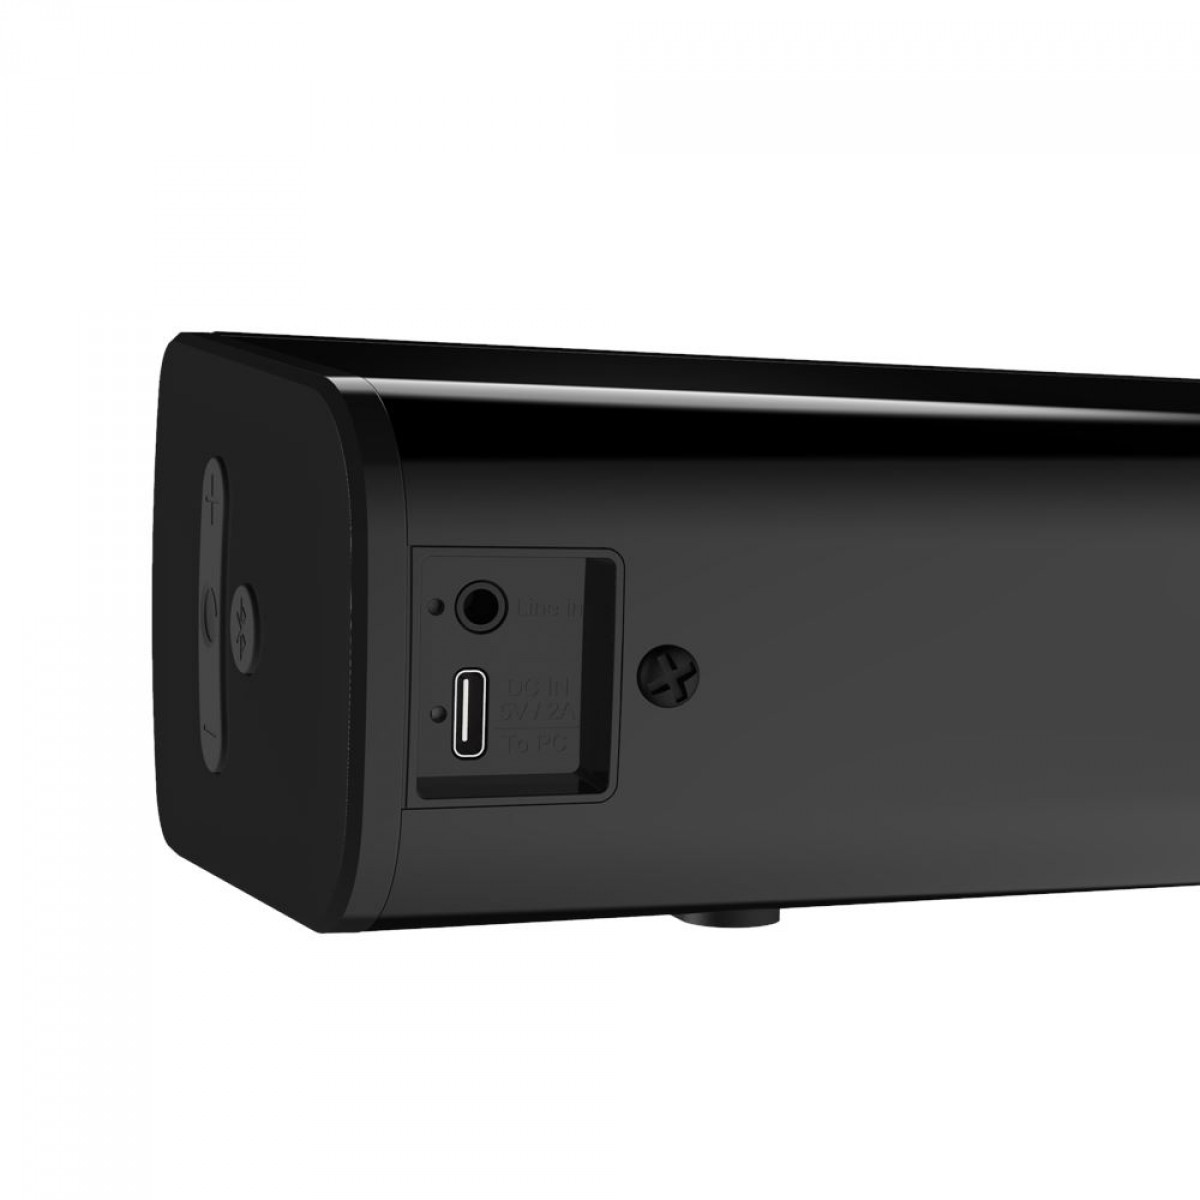 Caixa De Som Creative Stage Air V2, Compacto, USB/Bluetooth/3.5mm, Black, 51MF8395AA000